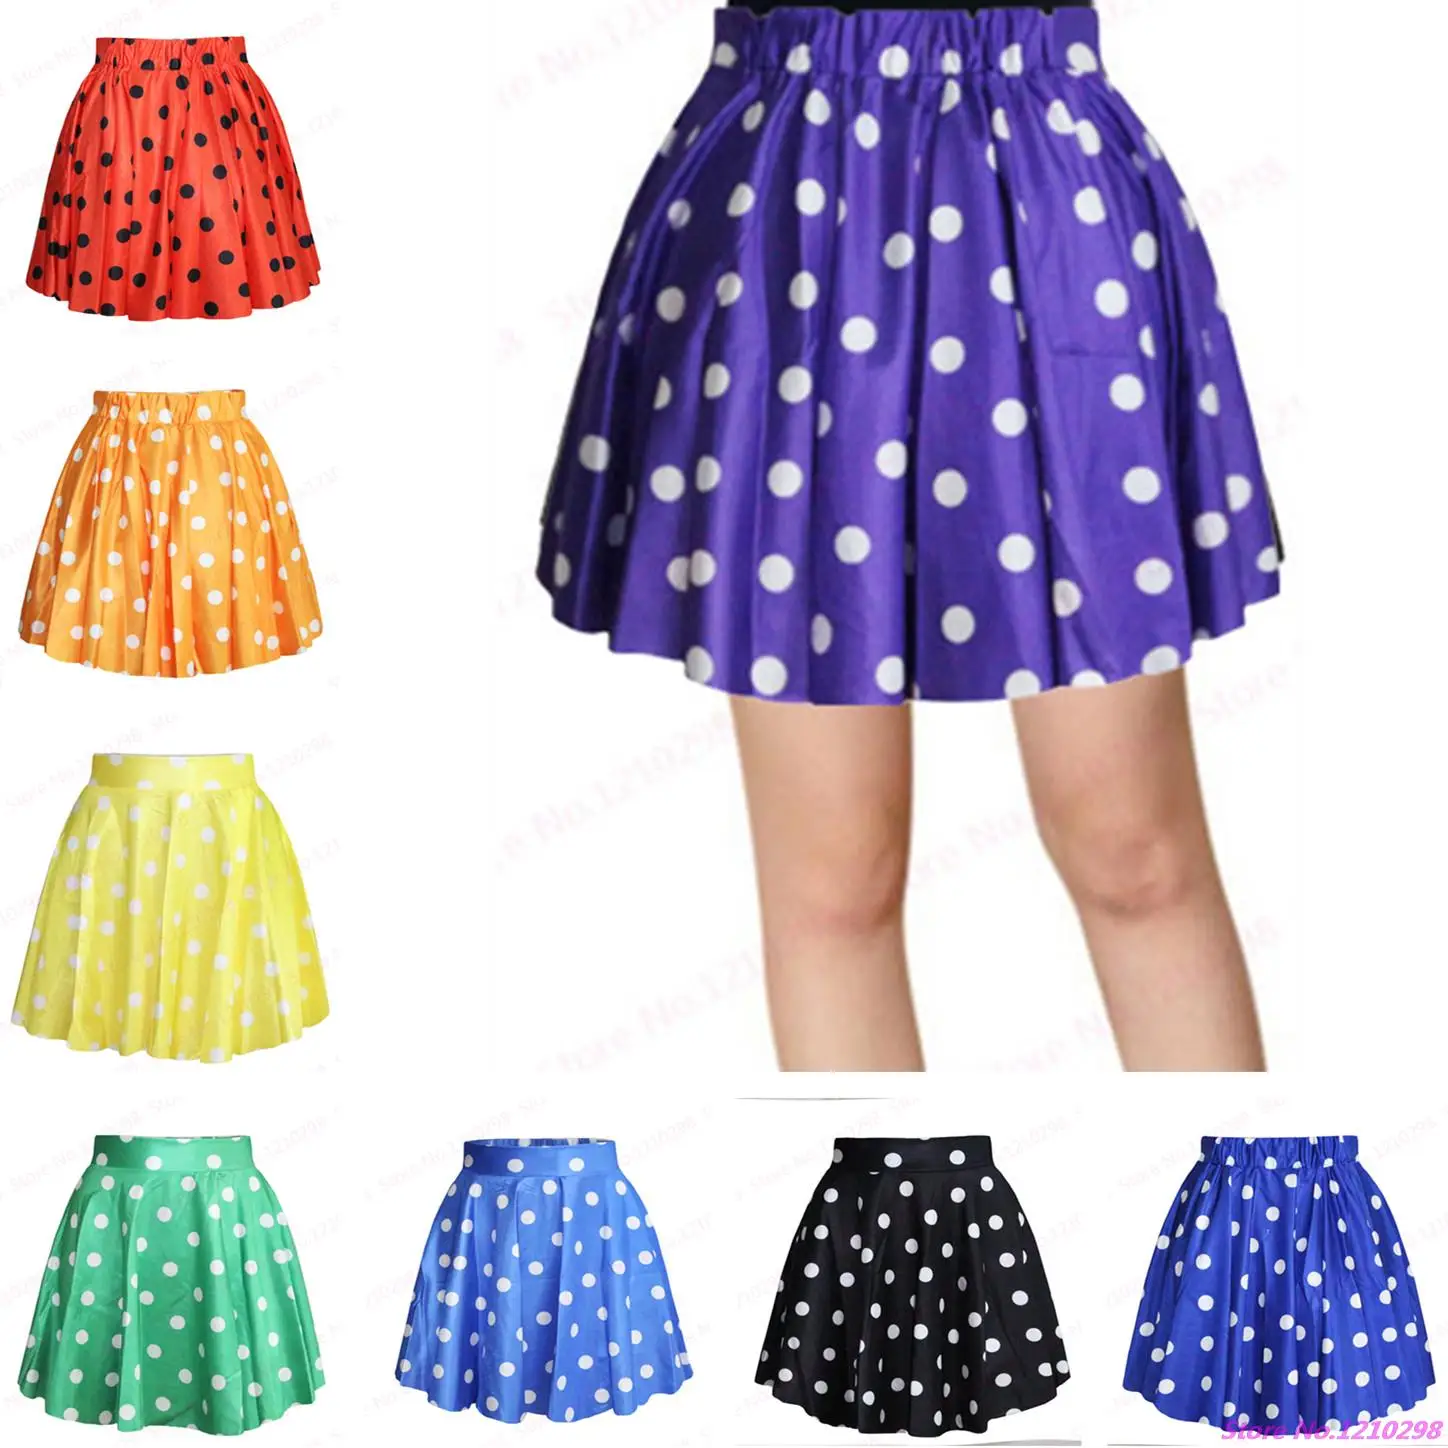 Aliexpress.com : Buy New Women Candy Pleated Mini Tennis Skirts High ...